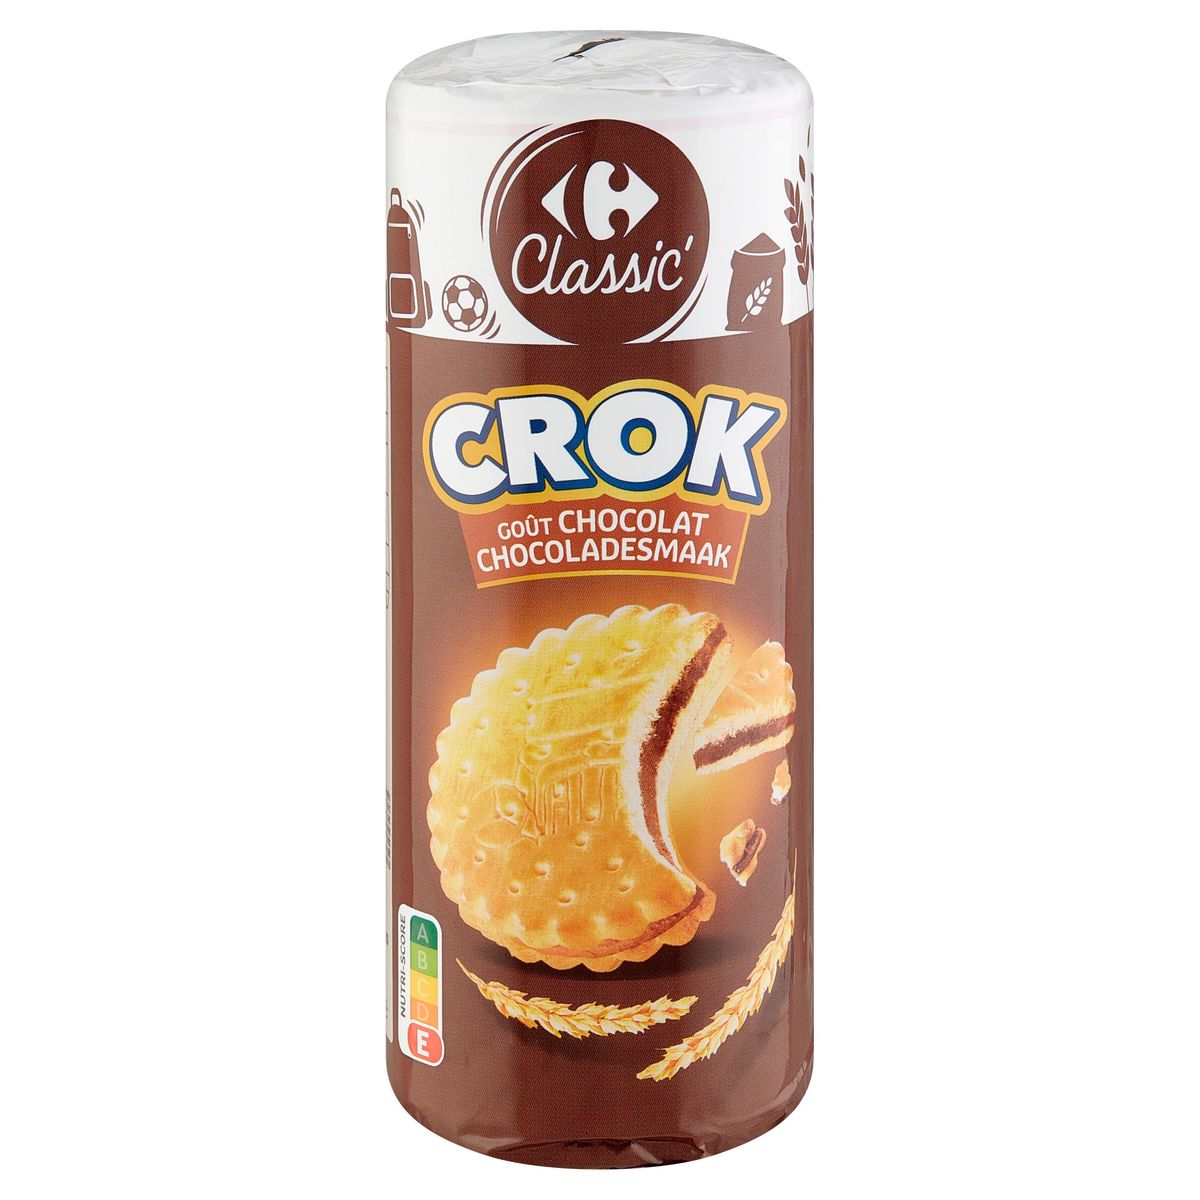 Carrefour Classic' Crok Chocoladesmaak 300 g